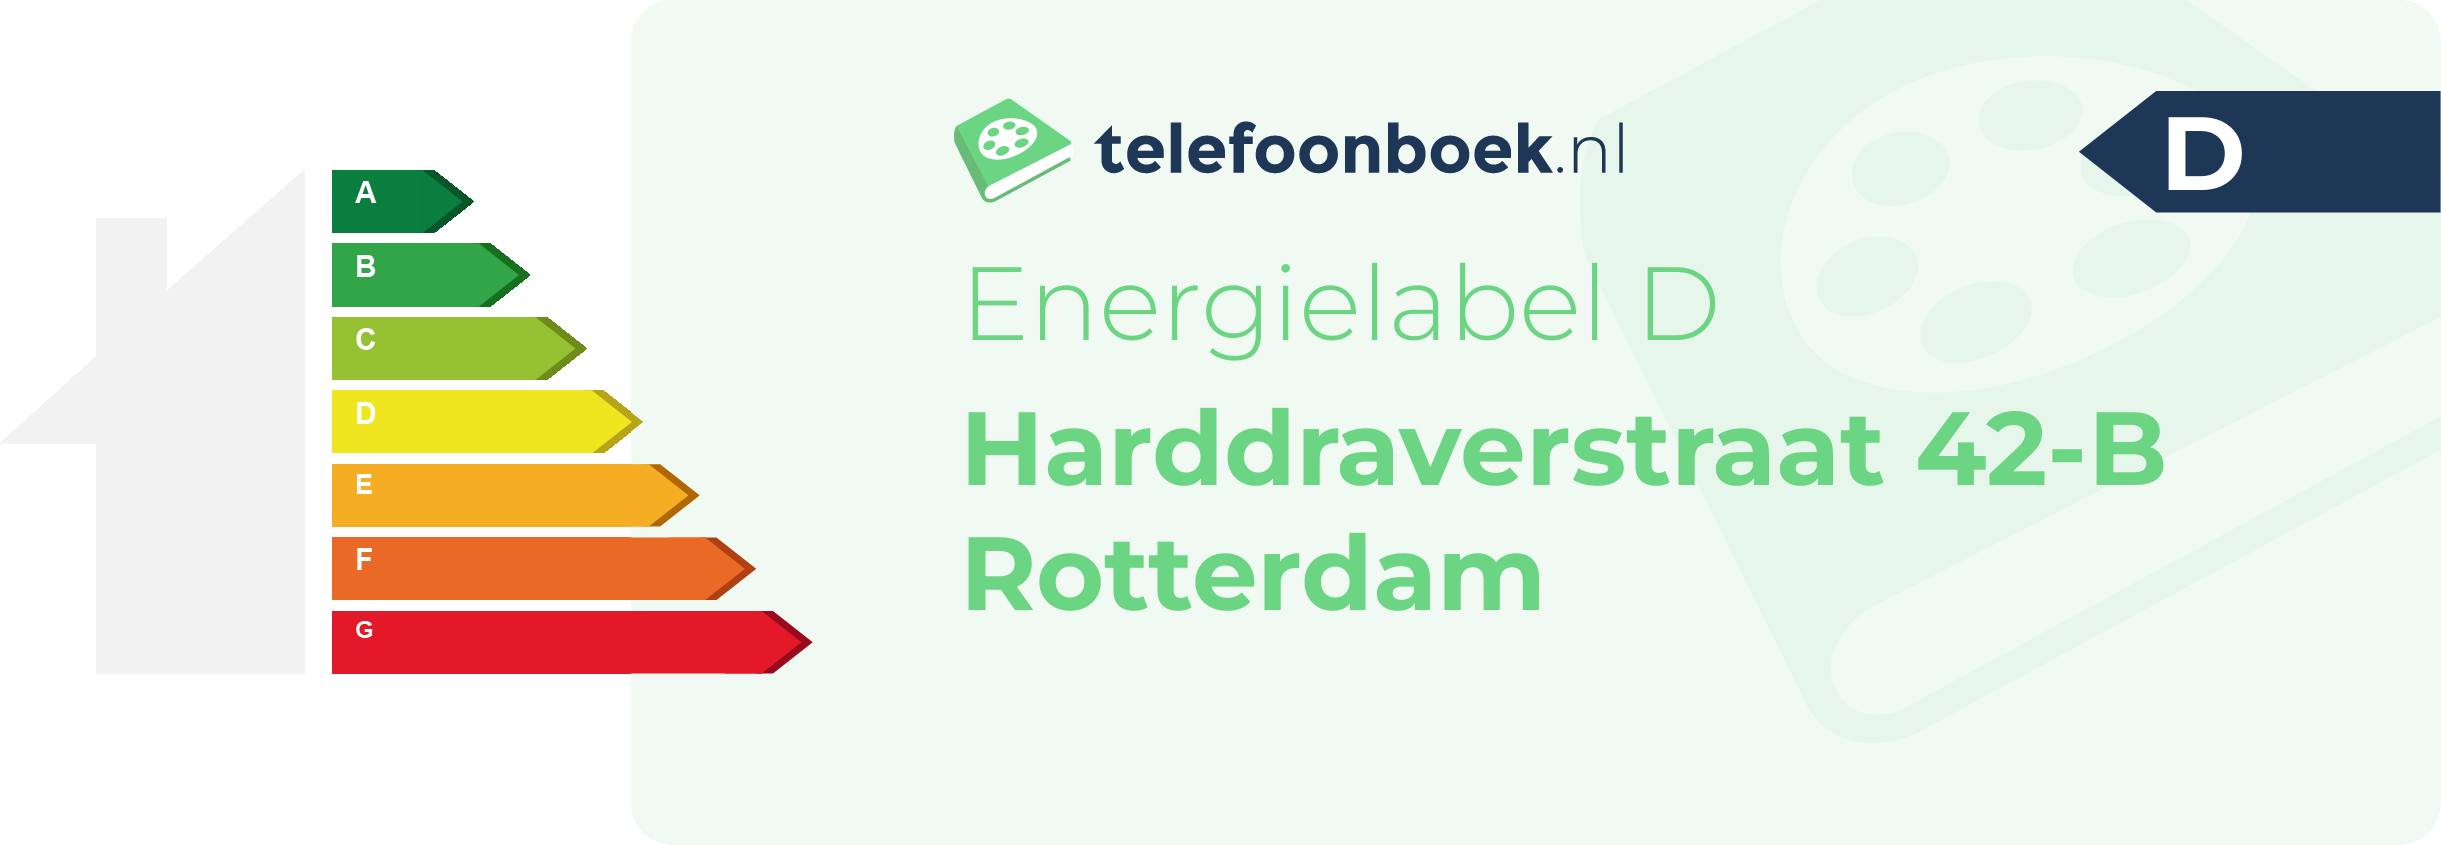 Energielabel Harddraverstraat 42-B Rotterdam